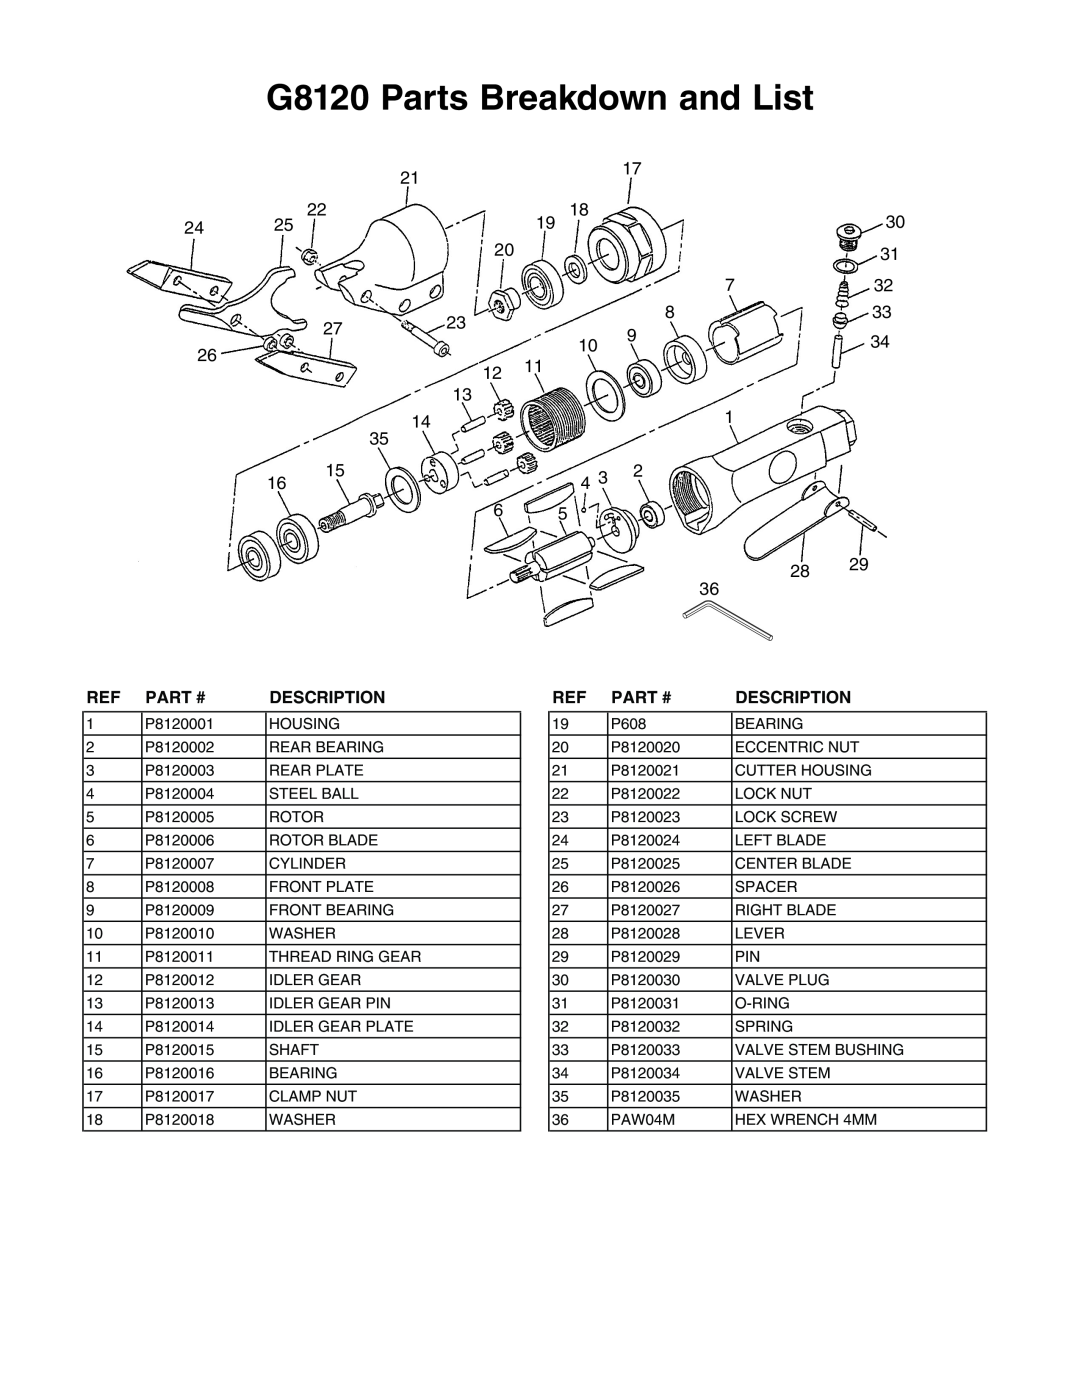 Grizzly instruction sheet G8120 Parts Breakdown and List, Part #, Description 